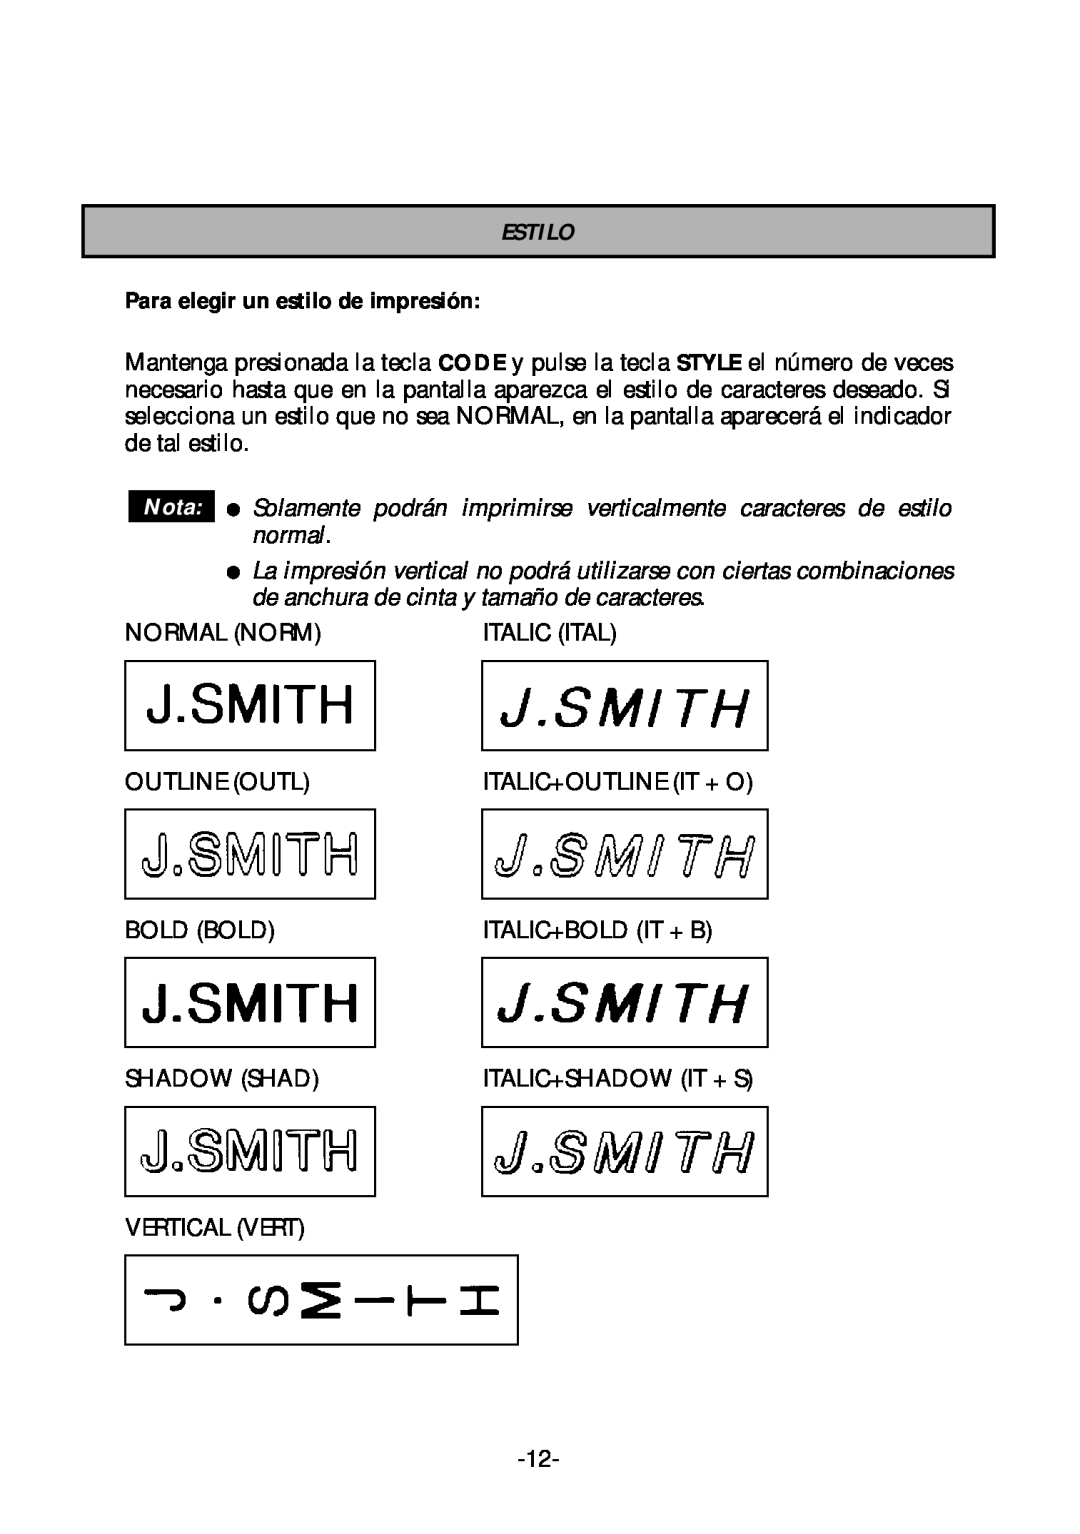 Brother PT-1700 manual Estilo, Para elegir un estilo de impresión, Nota 